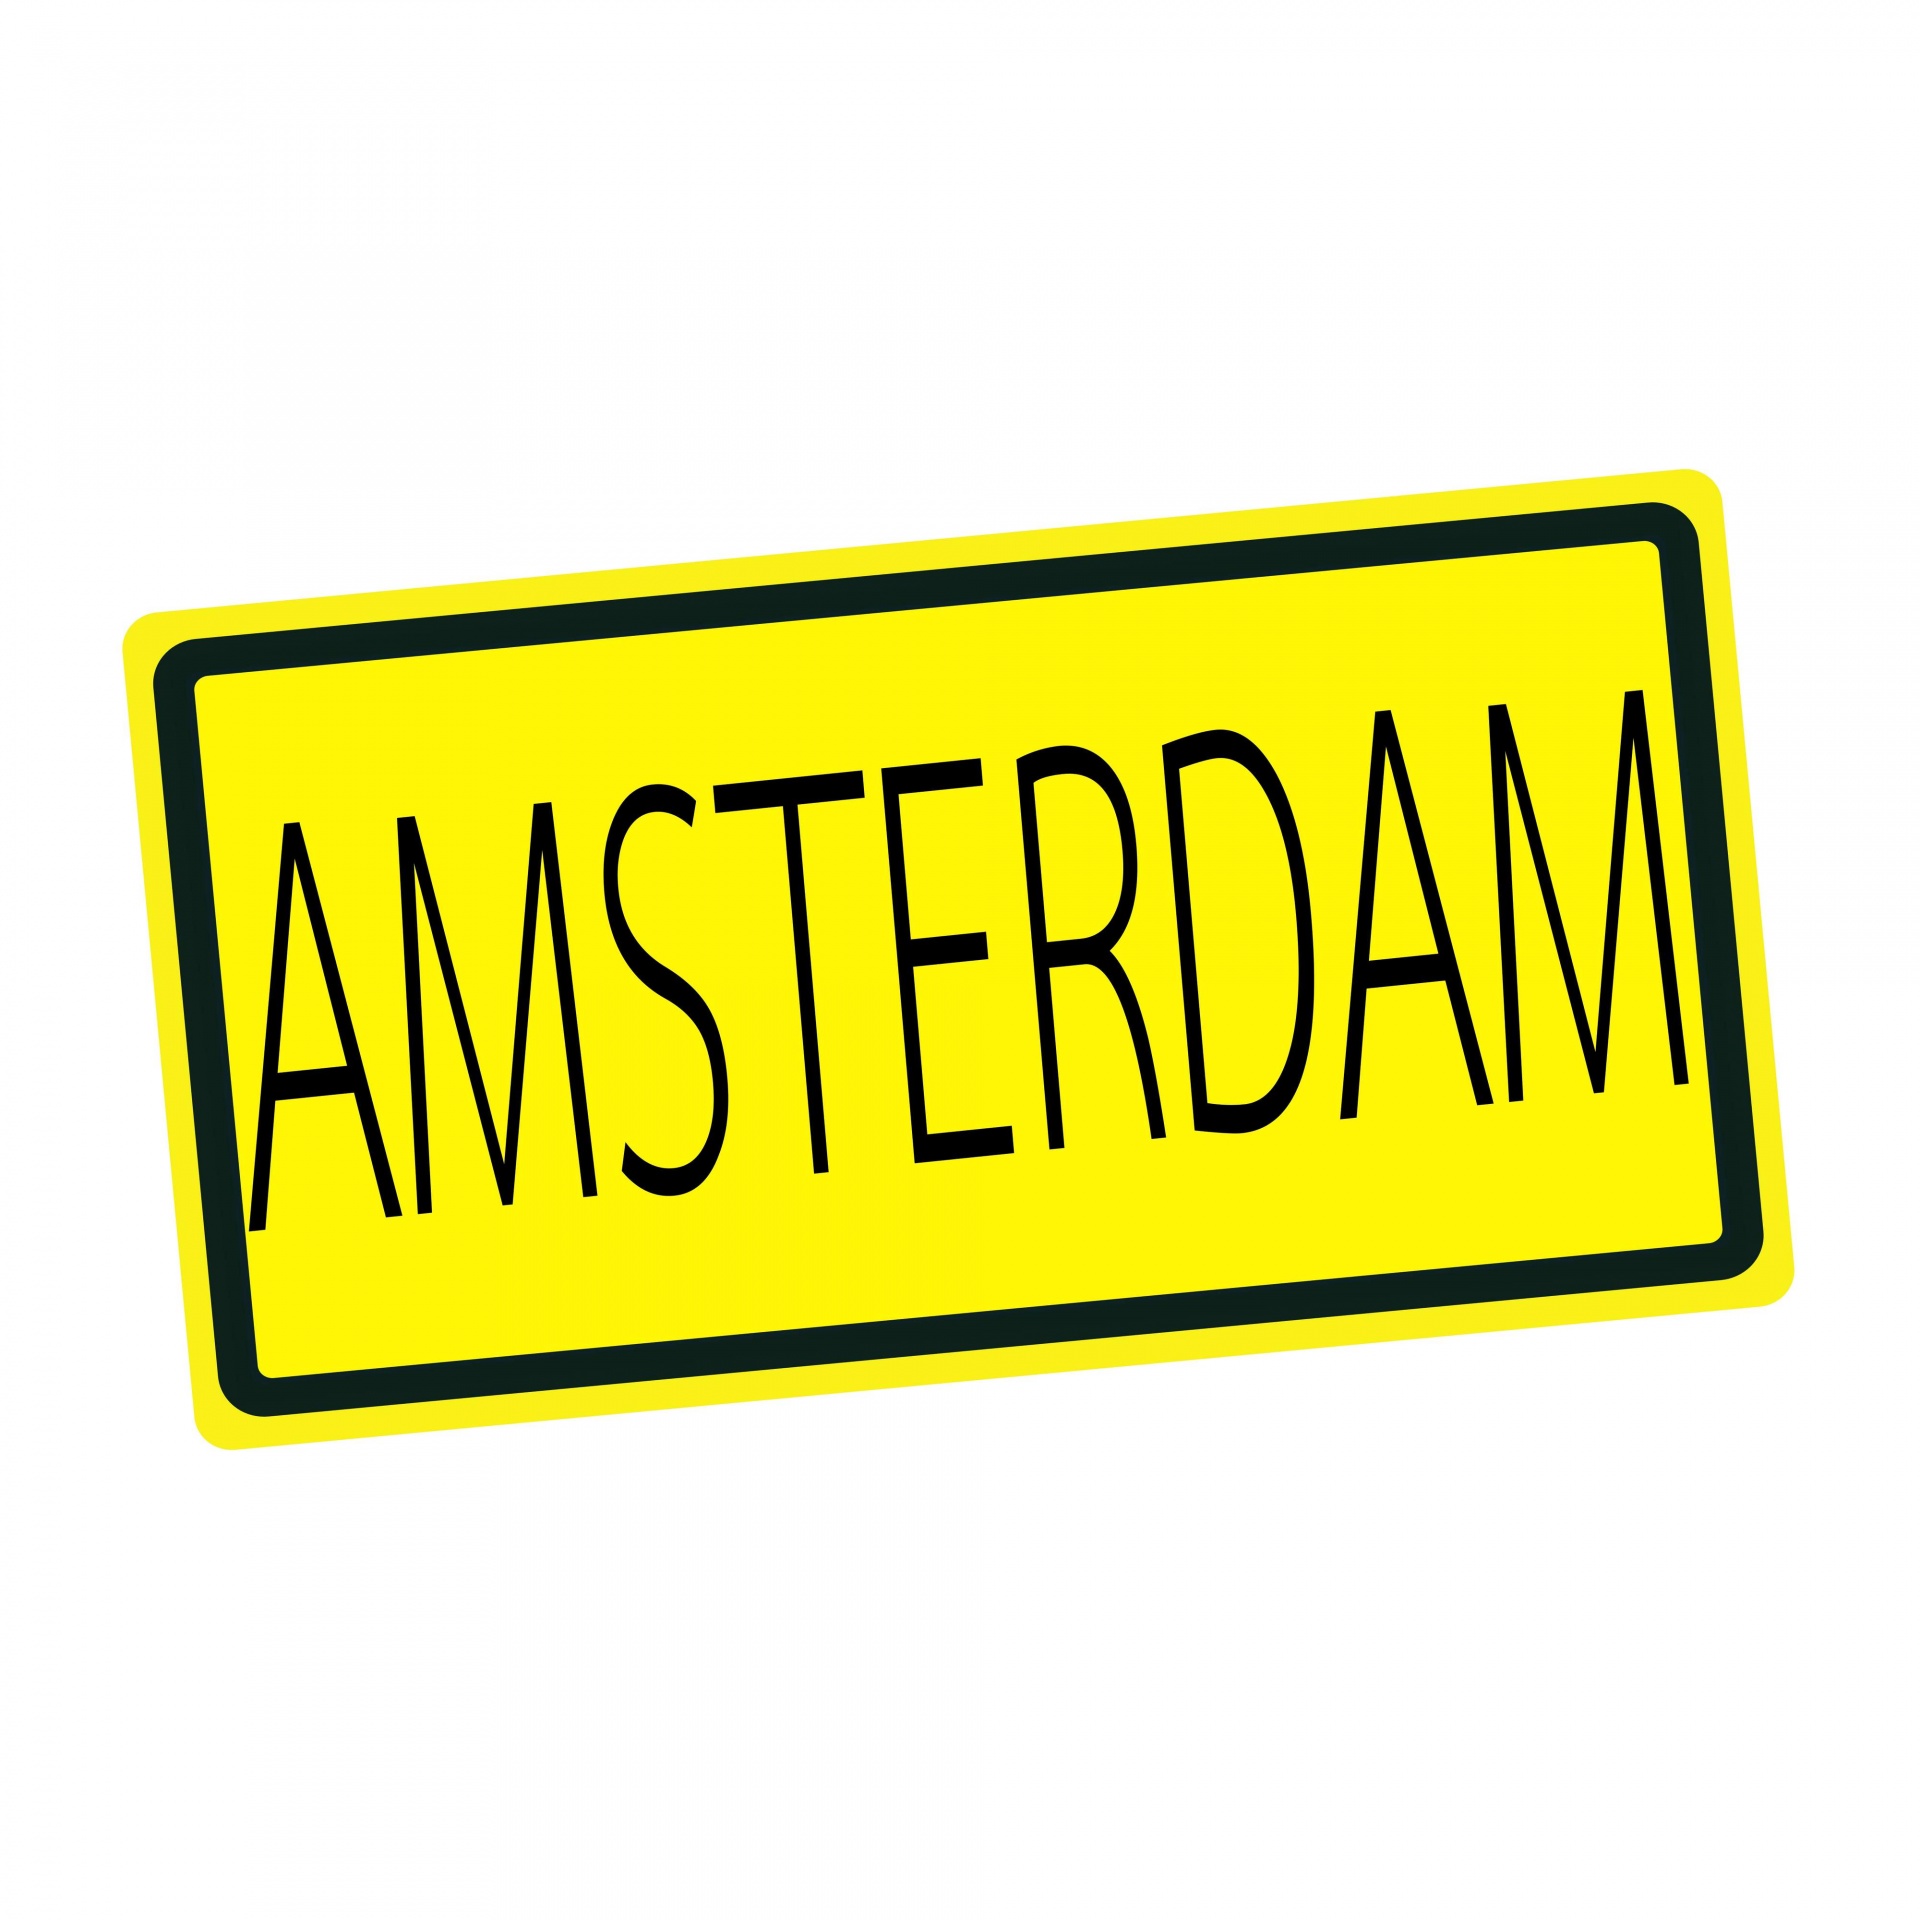 Amsterdam Black Stamp Text On Yellow